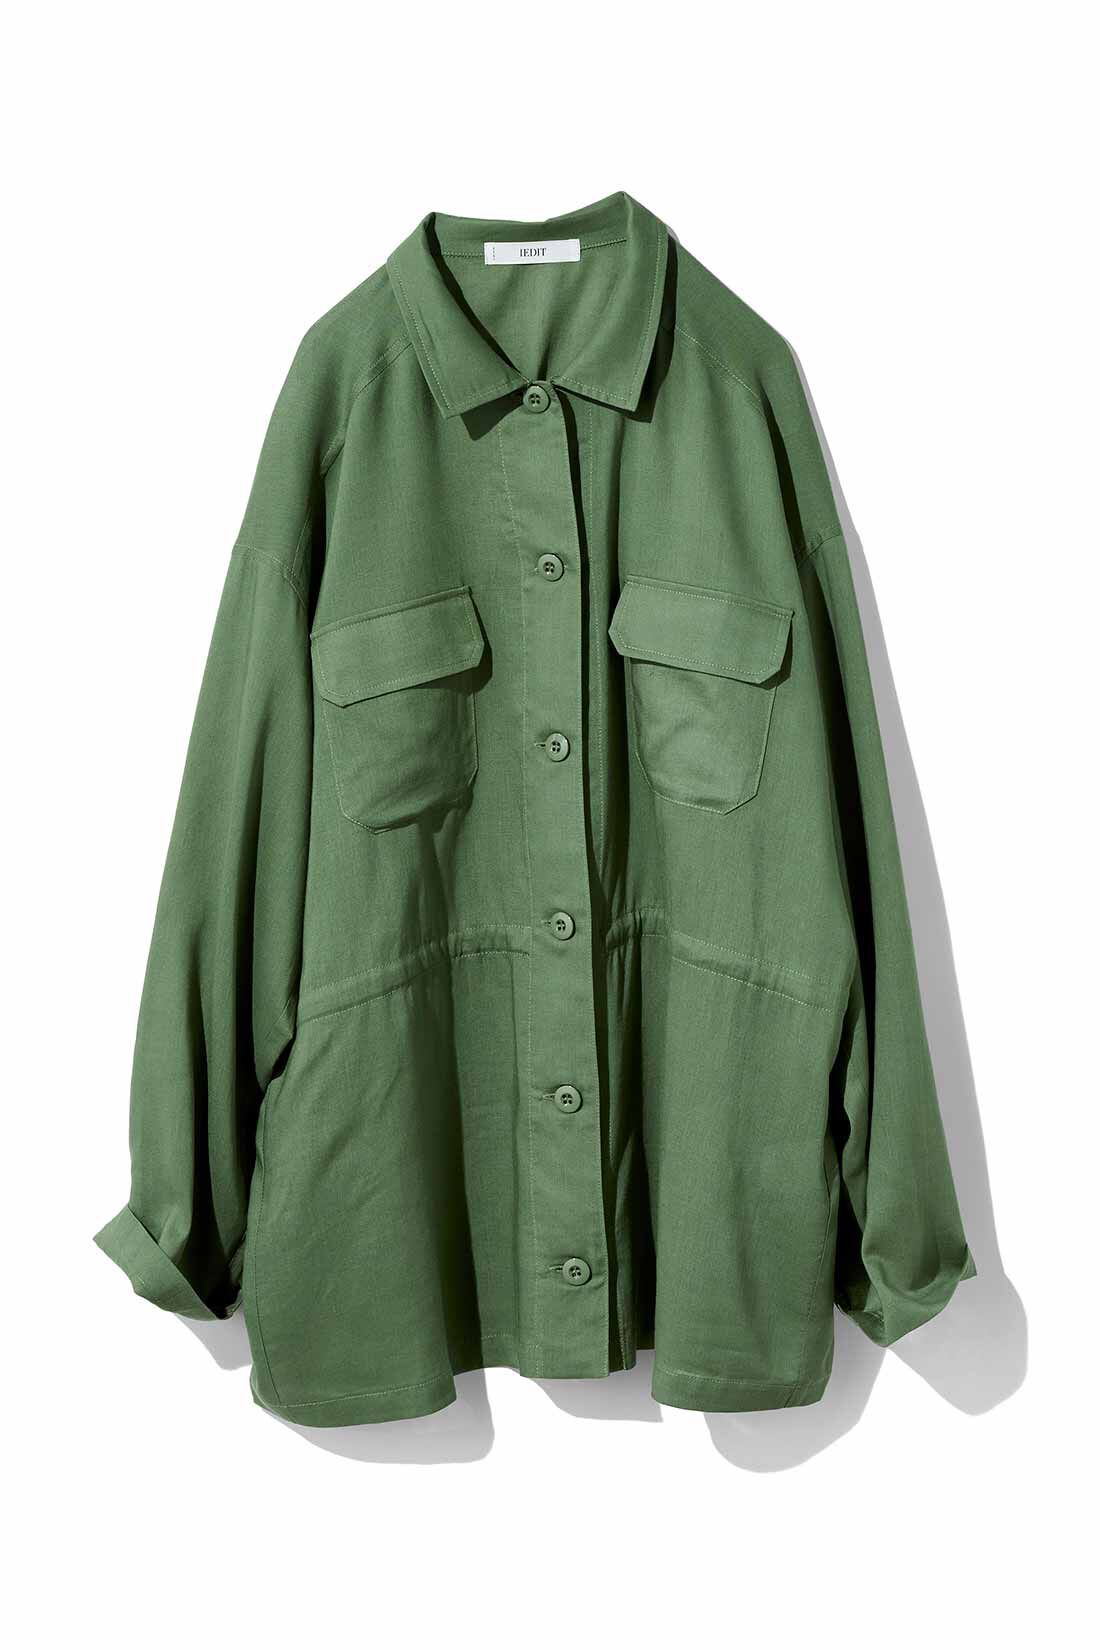 IEDIT|IEDIT[イディット]　リネン混素材のミリタリーシャツジャケット〈カーキグリーン〉|〈カーキグリーン〉